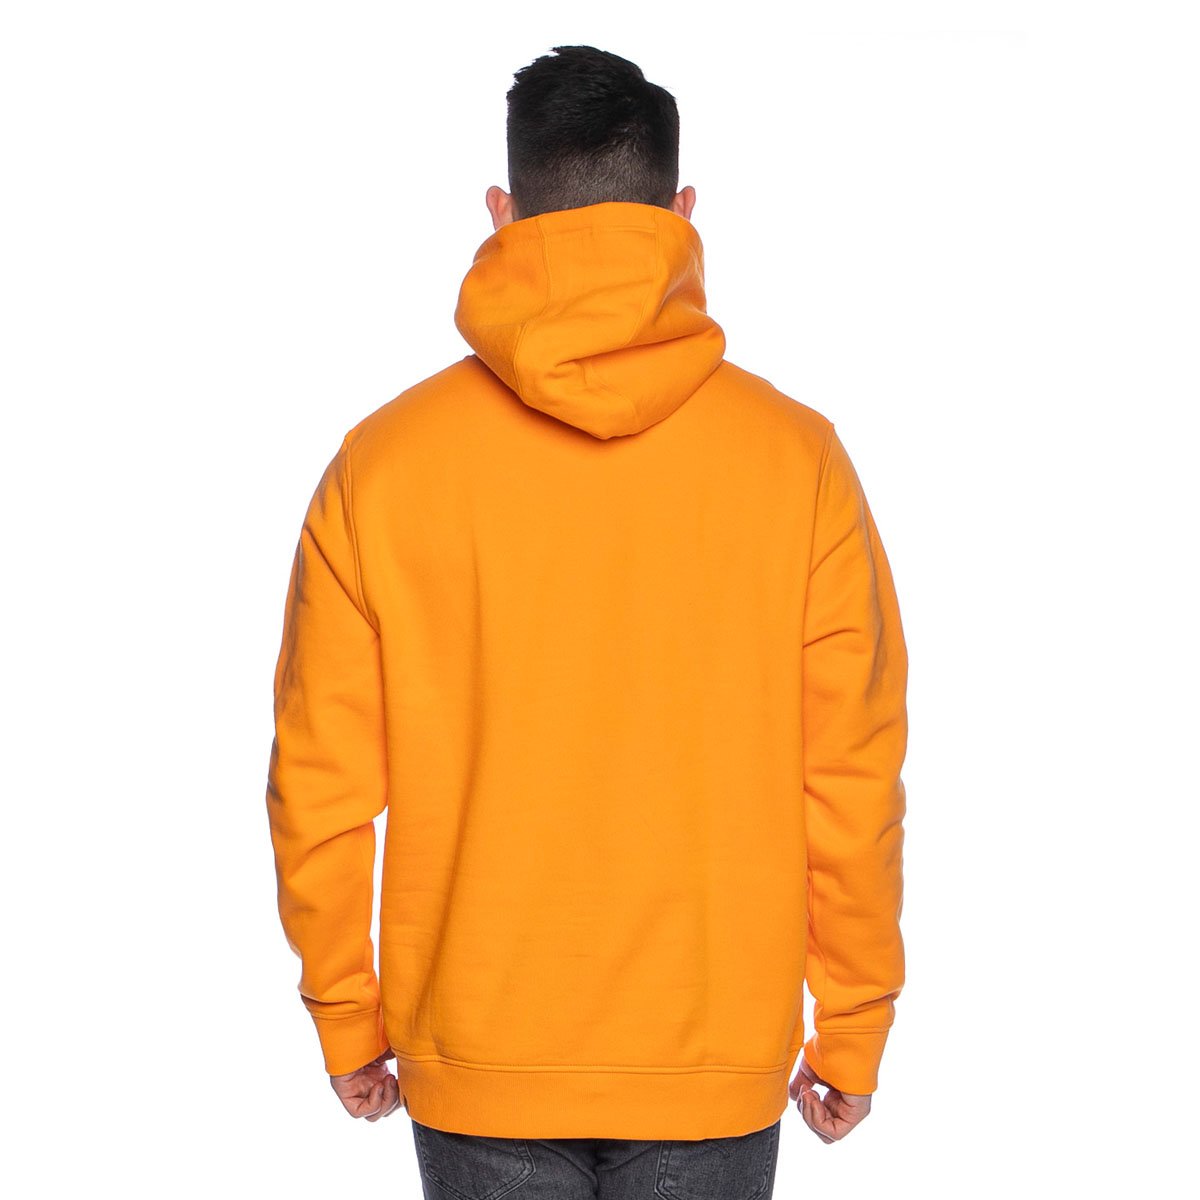 The North Face Sweatshirt Drew Peak PLV Hoodie flame orange | Bludshop.com